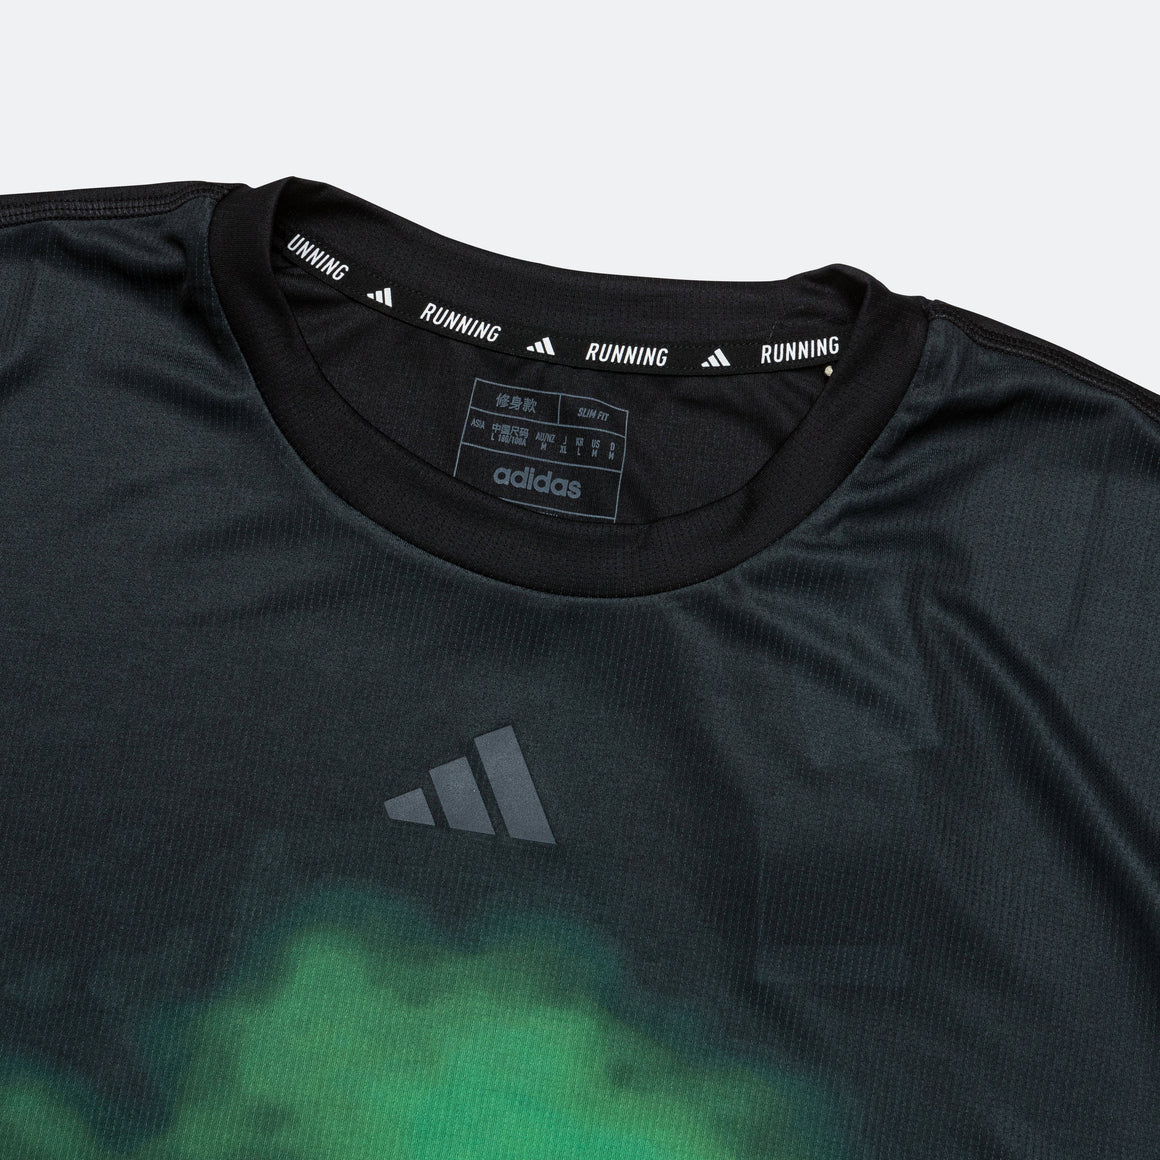 adidas - Berlin T-Shirt - Black/Vivid Green - Up There Athletics